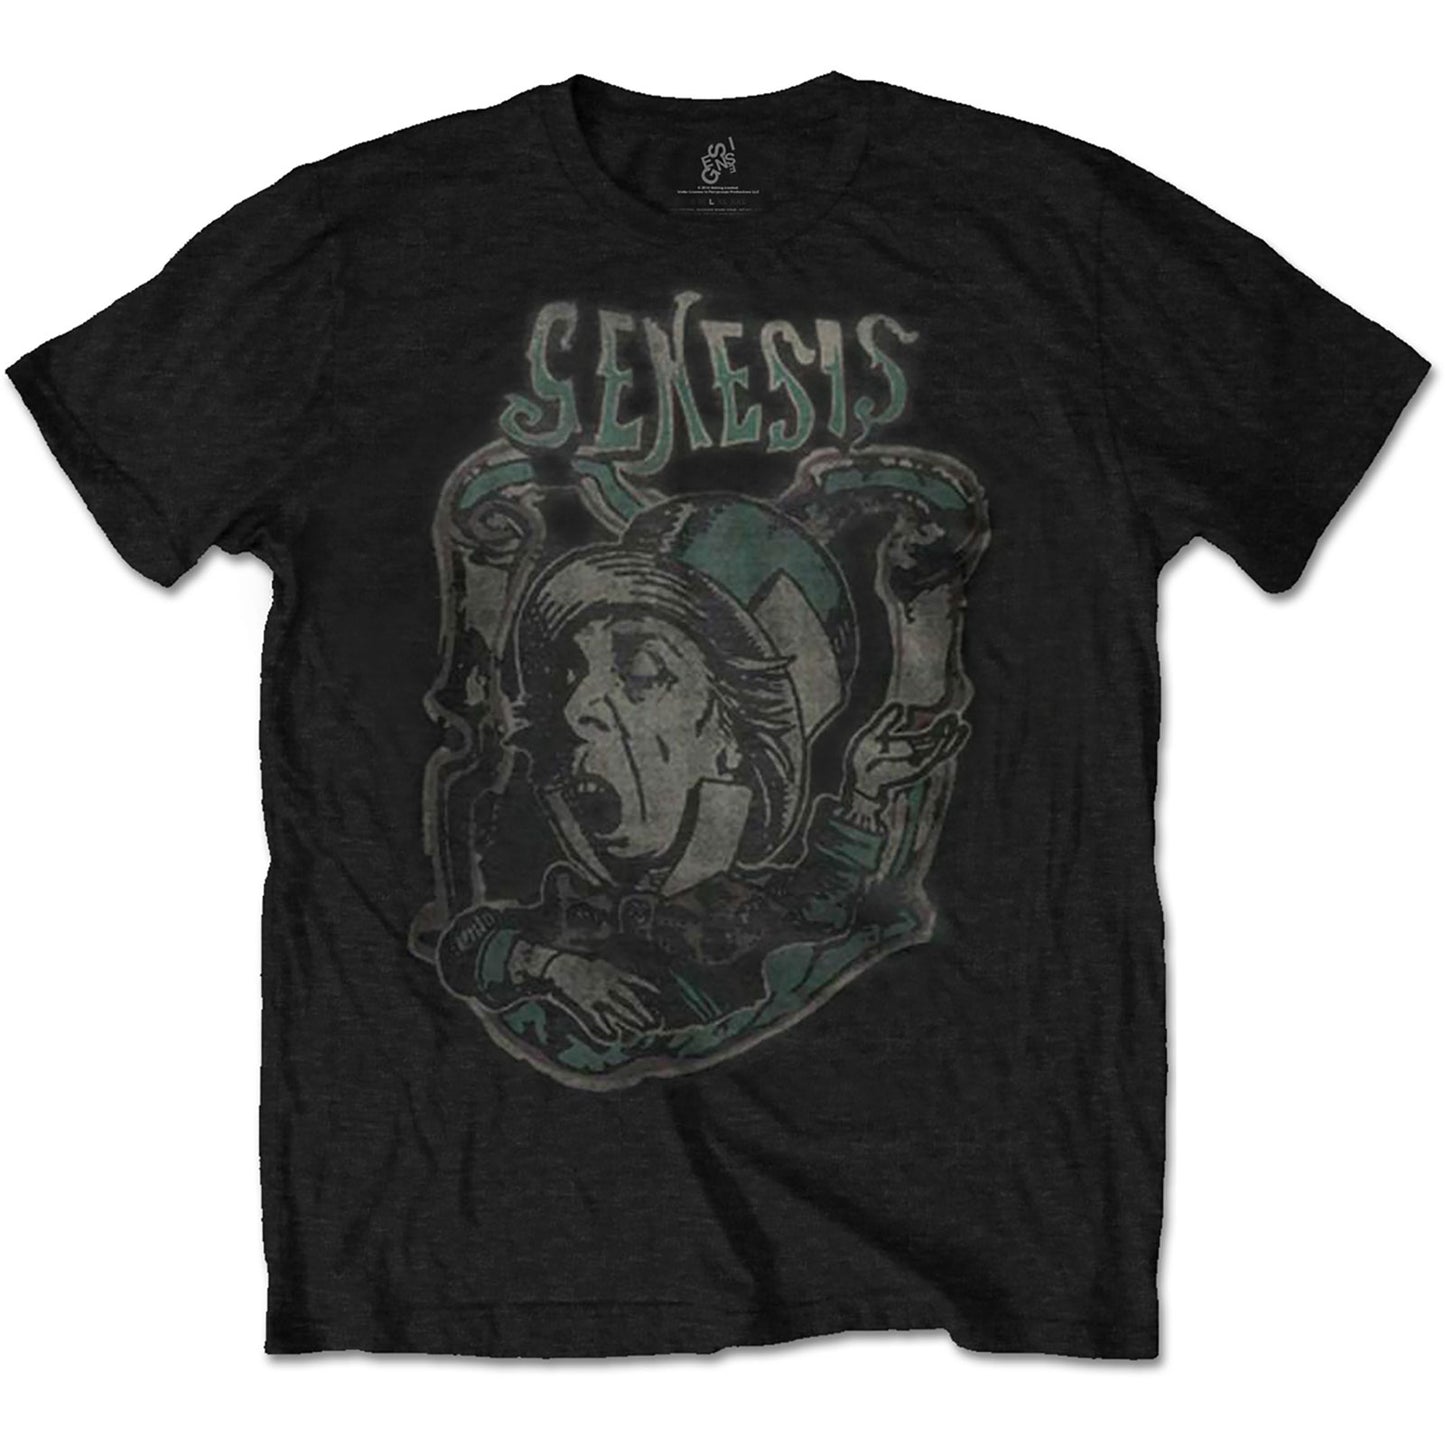 Genesis T-Shirt: Mad Hatter 2